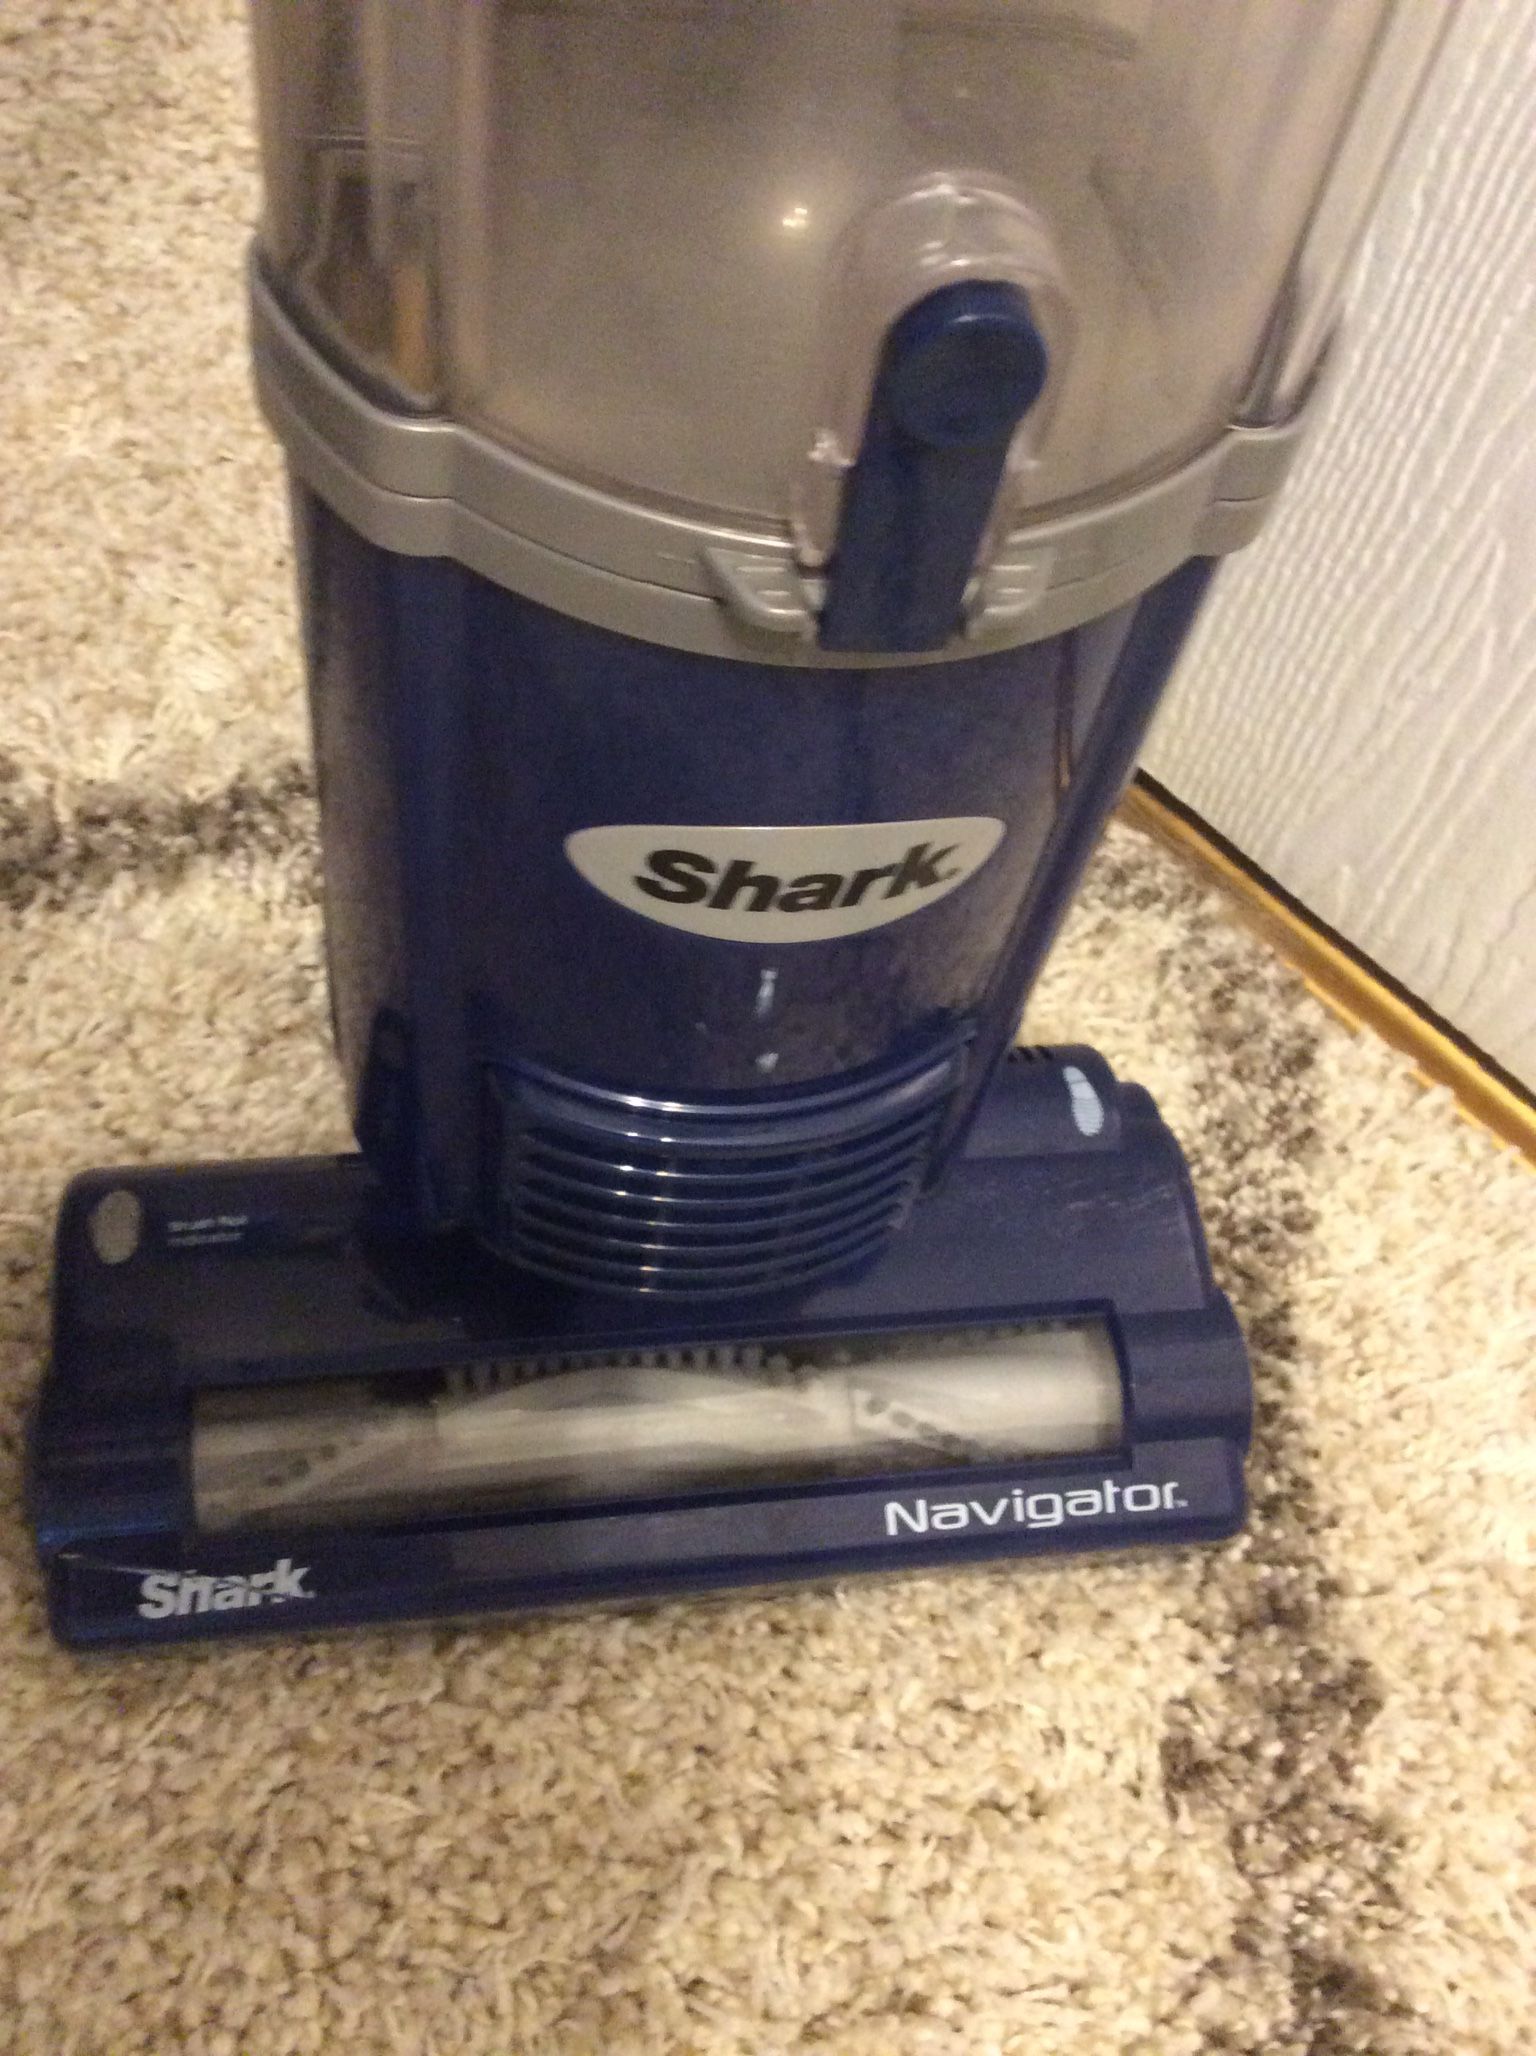 Shark Vacuum Works Great